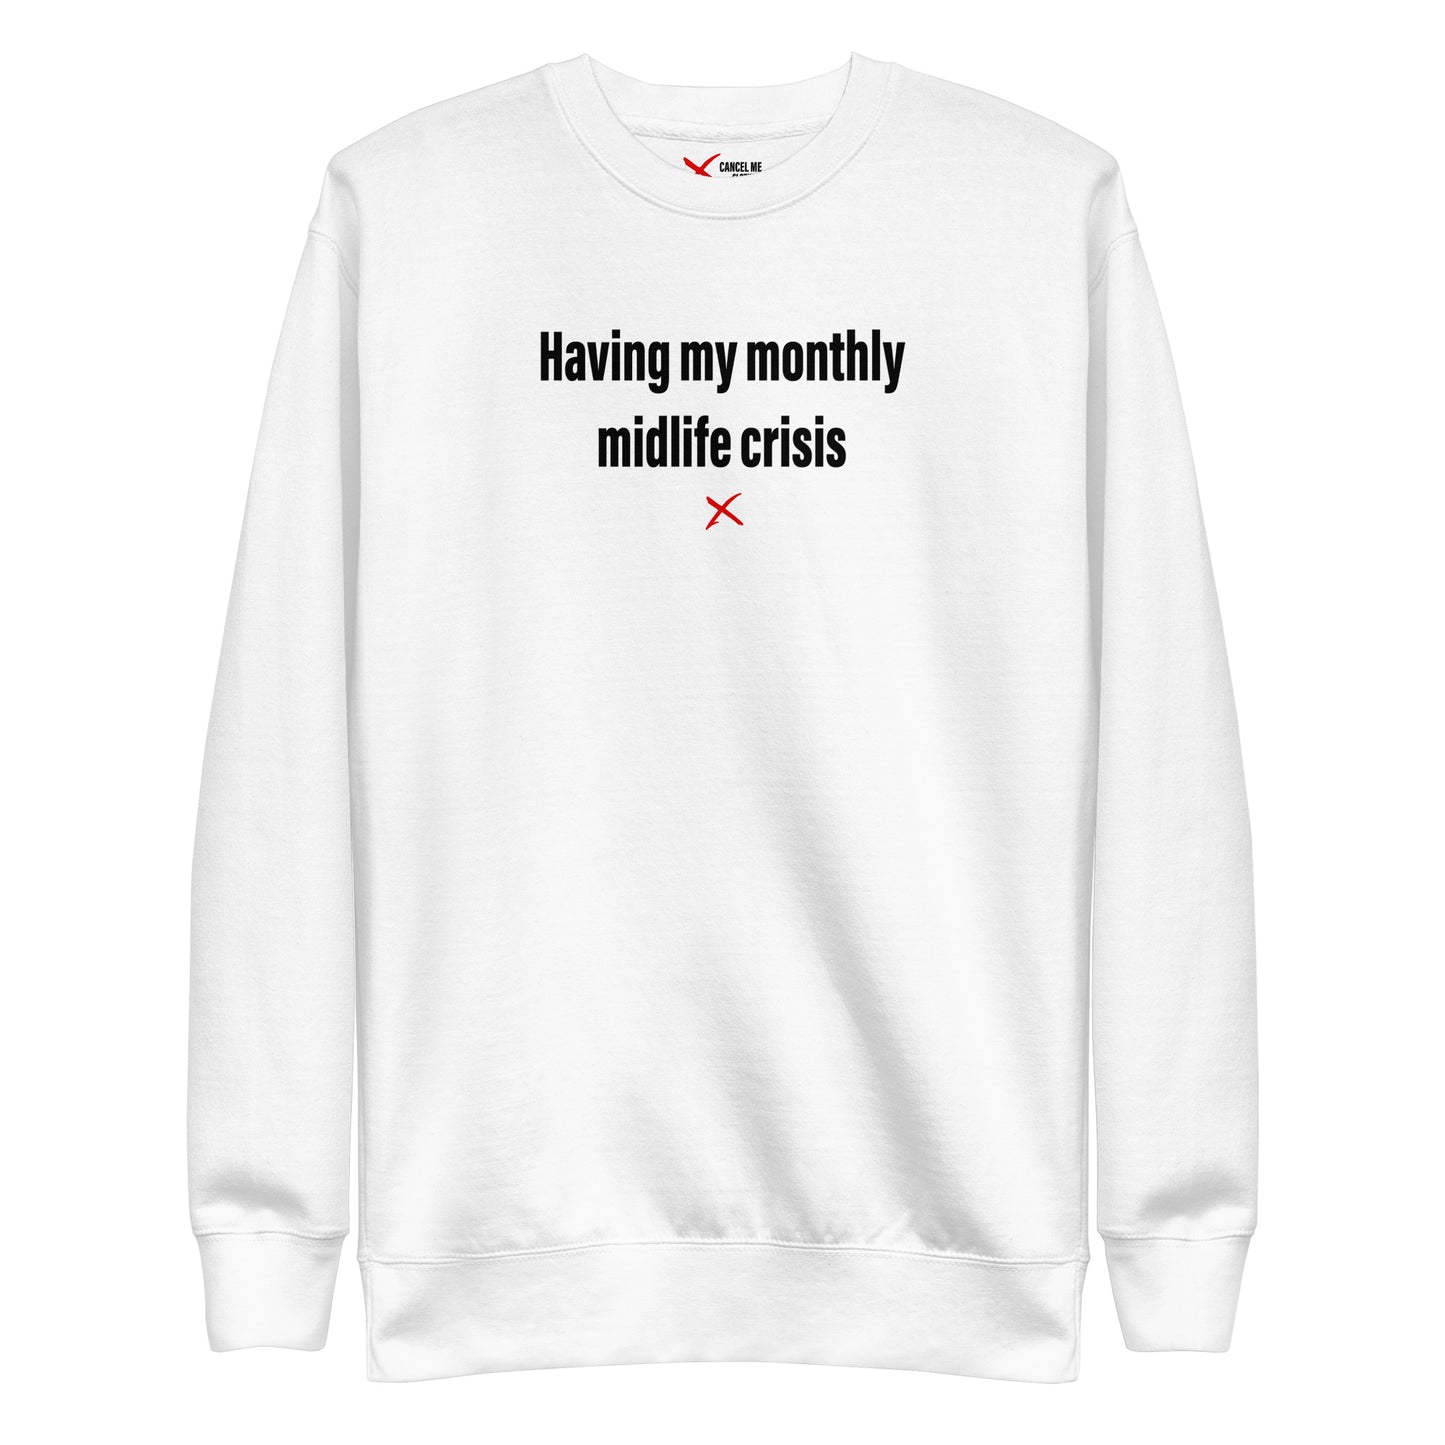 Having my monthly midlife crisis - Sweatshirt